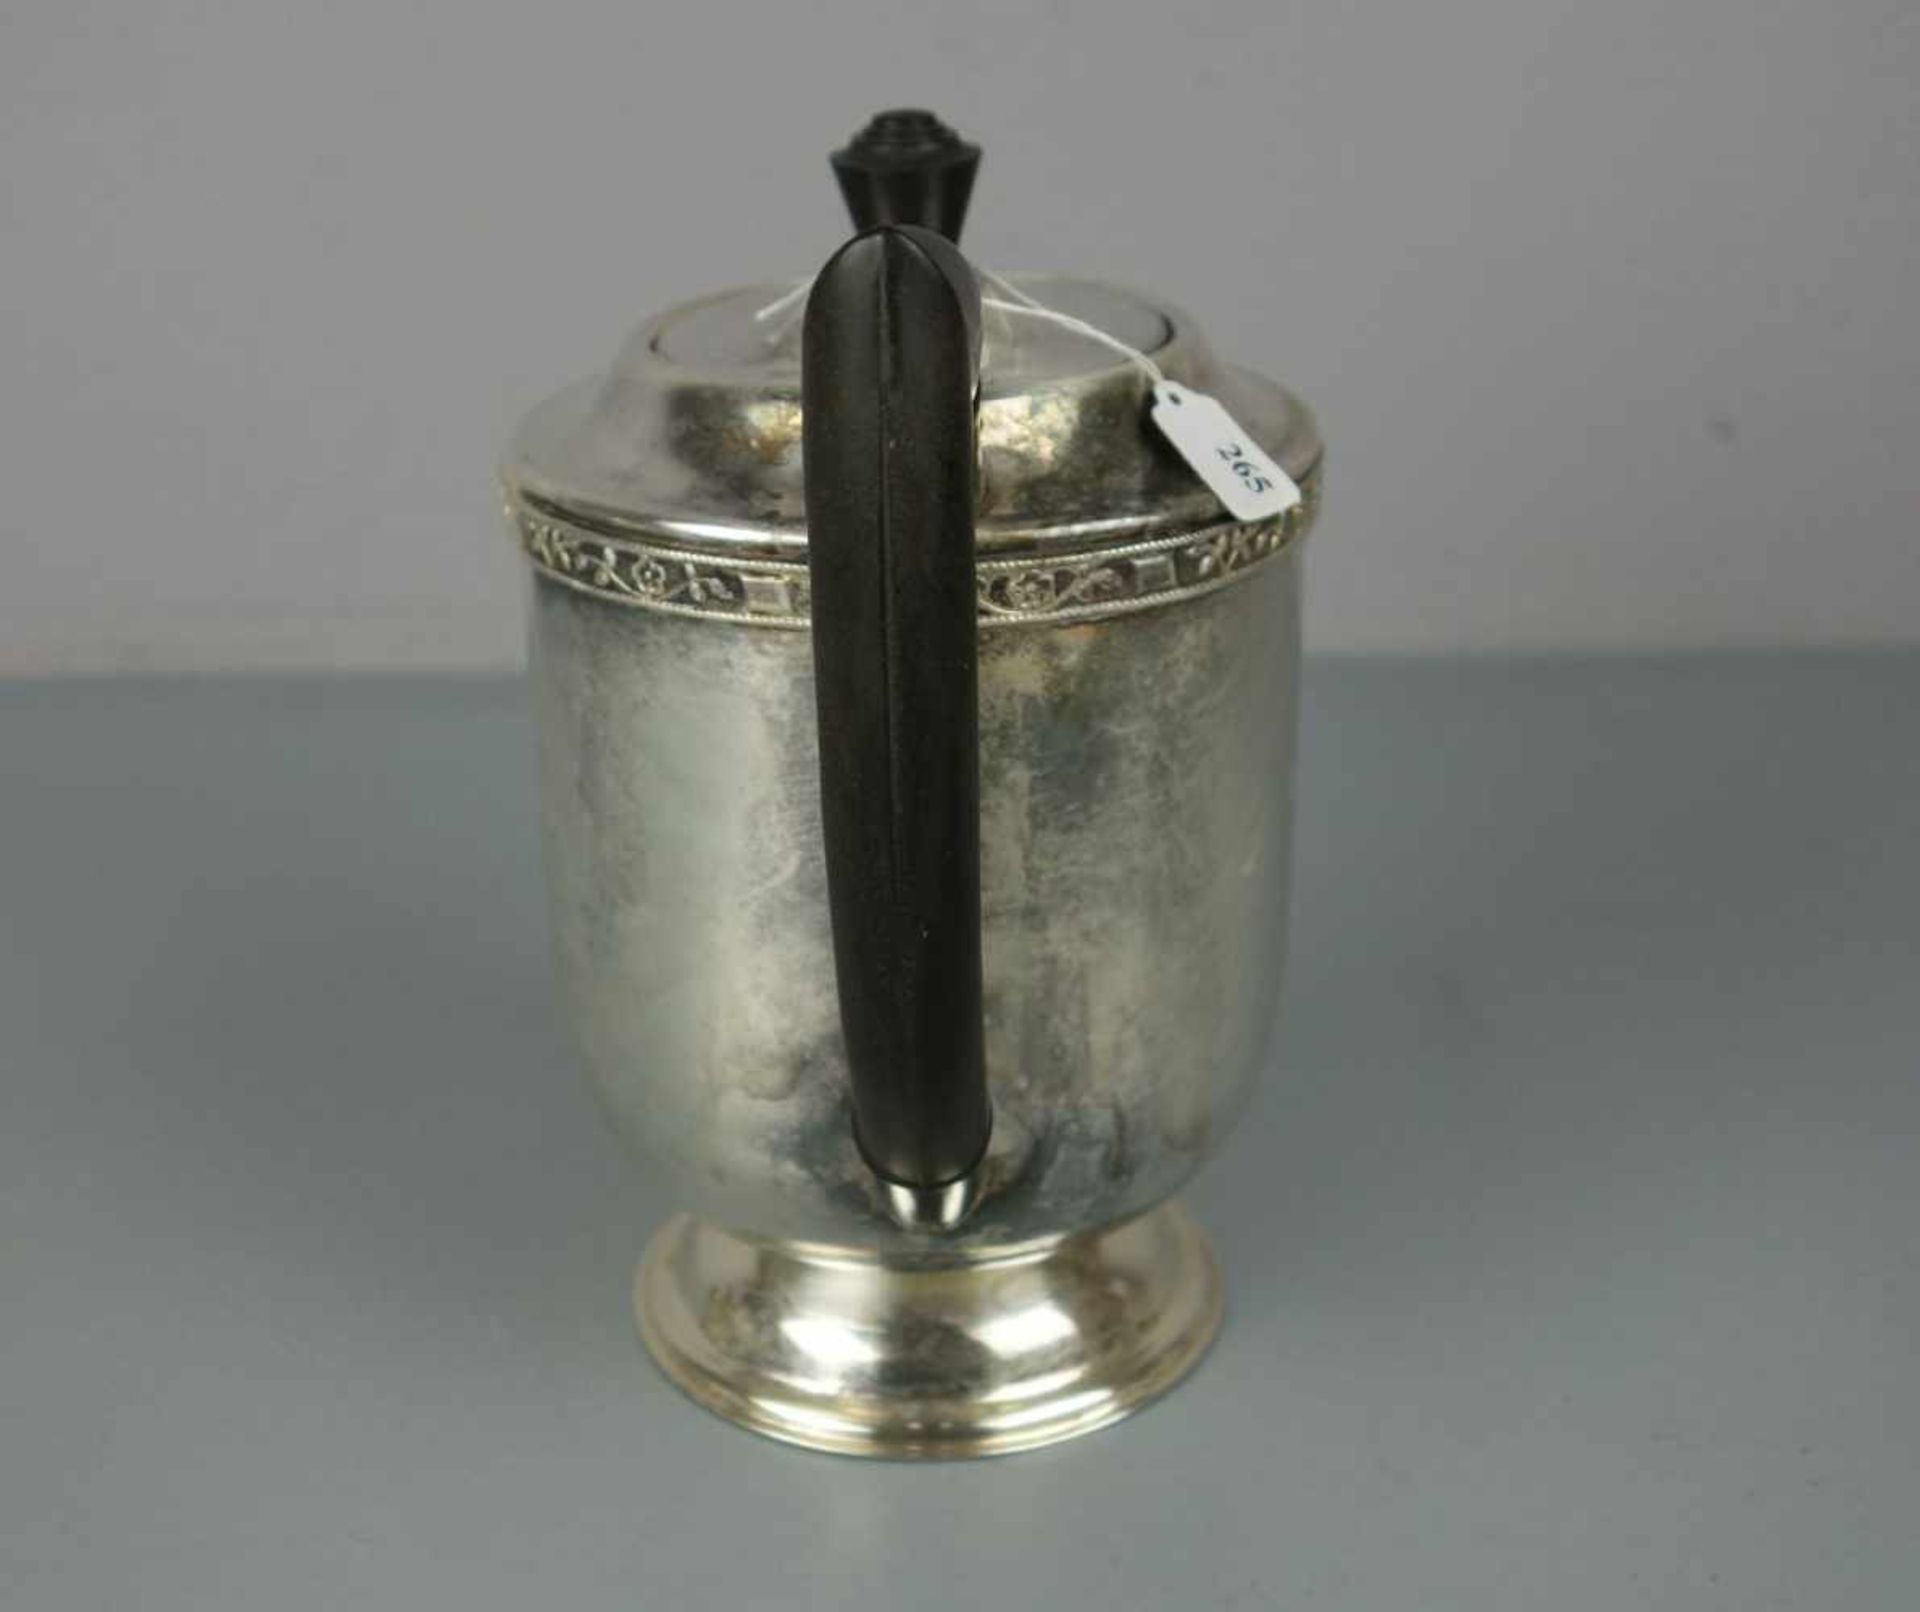 KAFFEEKANNE / KANNE / coffee pot, versilbertes Metall und Bakelit, 1. H. 20. Jh., England, unter dem - Image 4 of 5